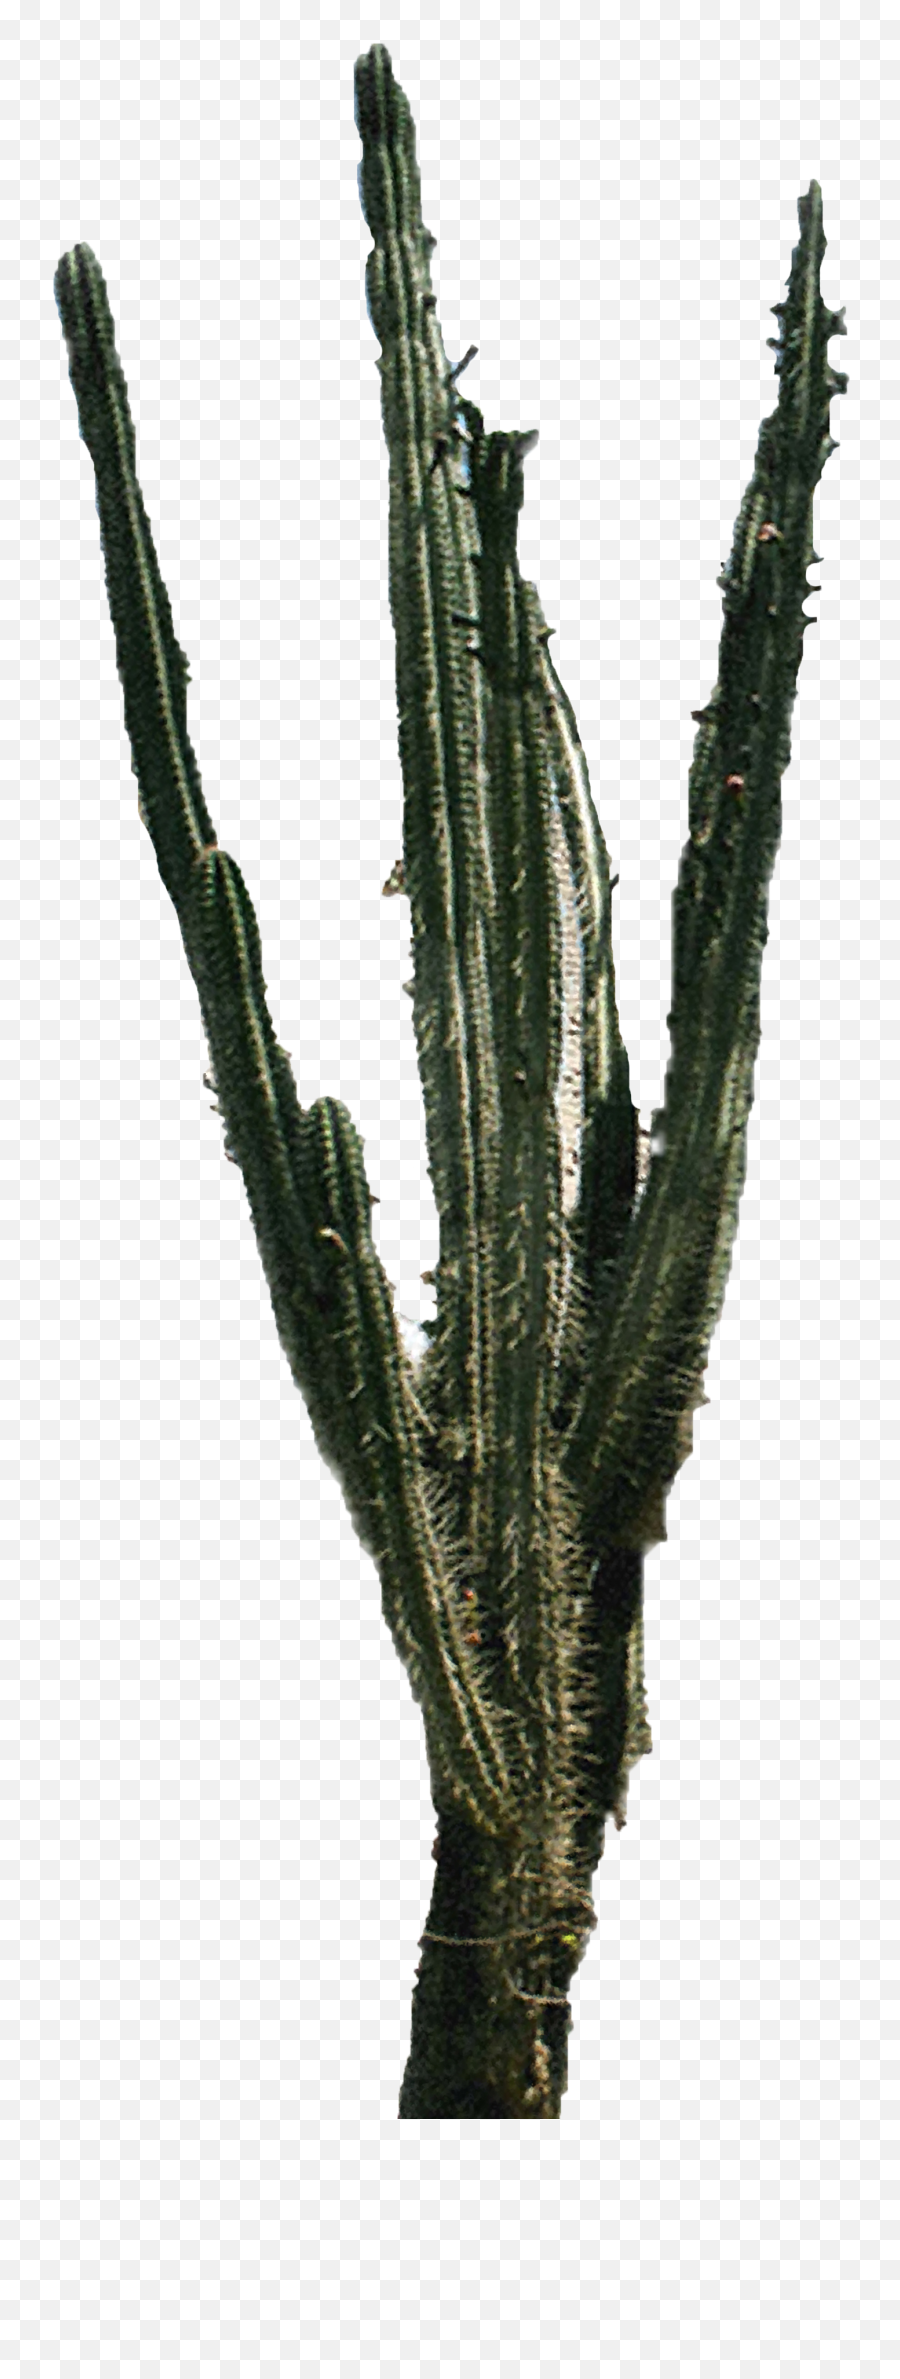 Cactus Png Transparent Images - Portable Network Graphics,Cacti Png